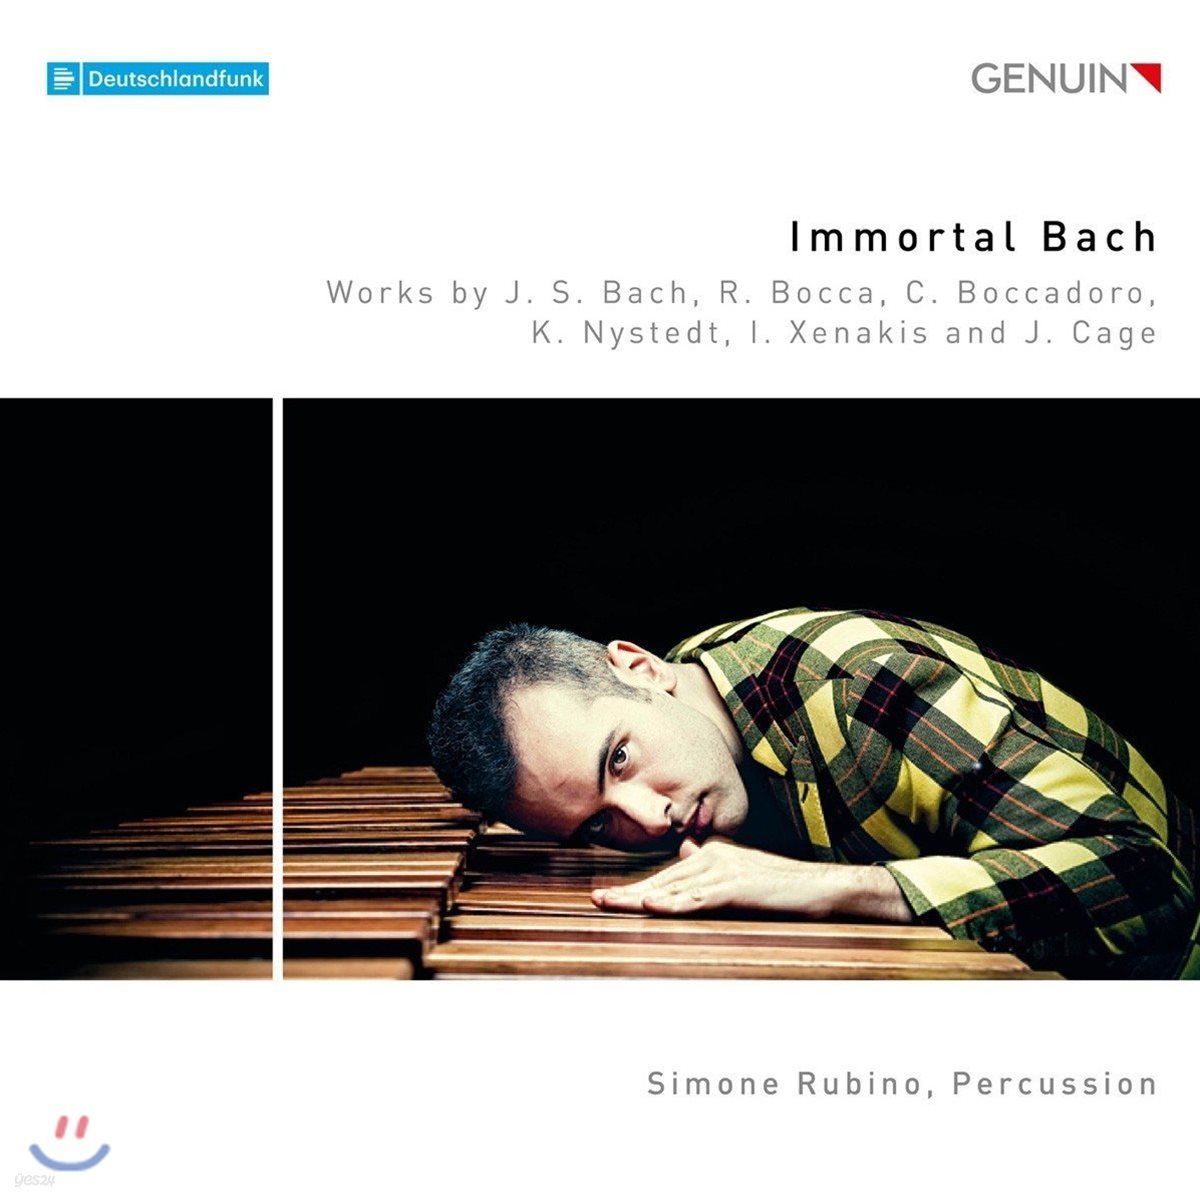 Simone Rubino 불멸의 바흐 - 바흐, 케이지, 크세나키스 등의 퍼쿠션 작품집 (Immortal Bach)